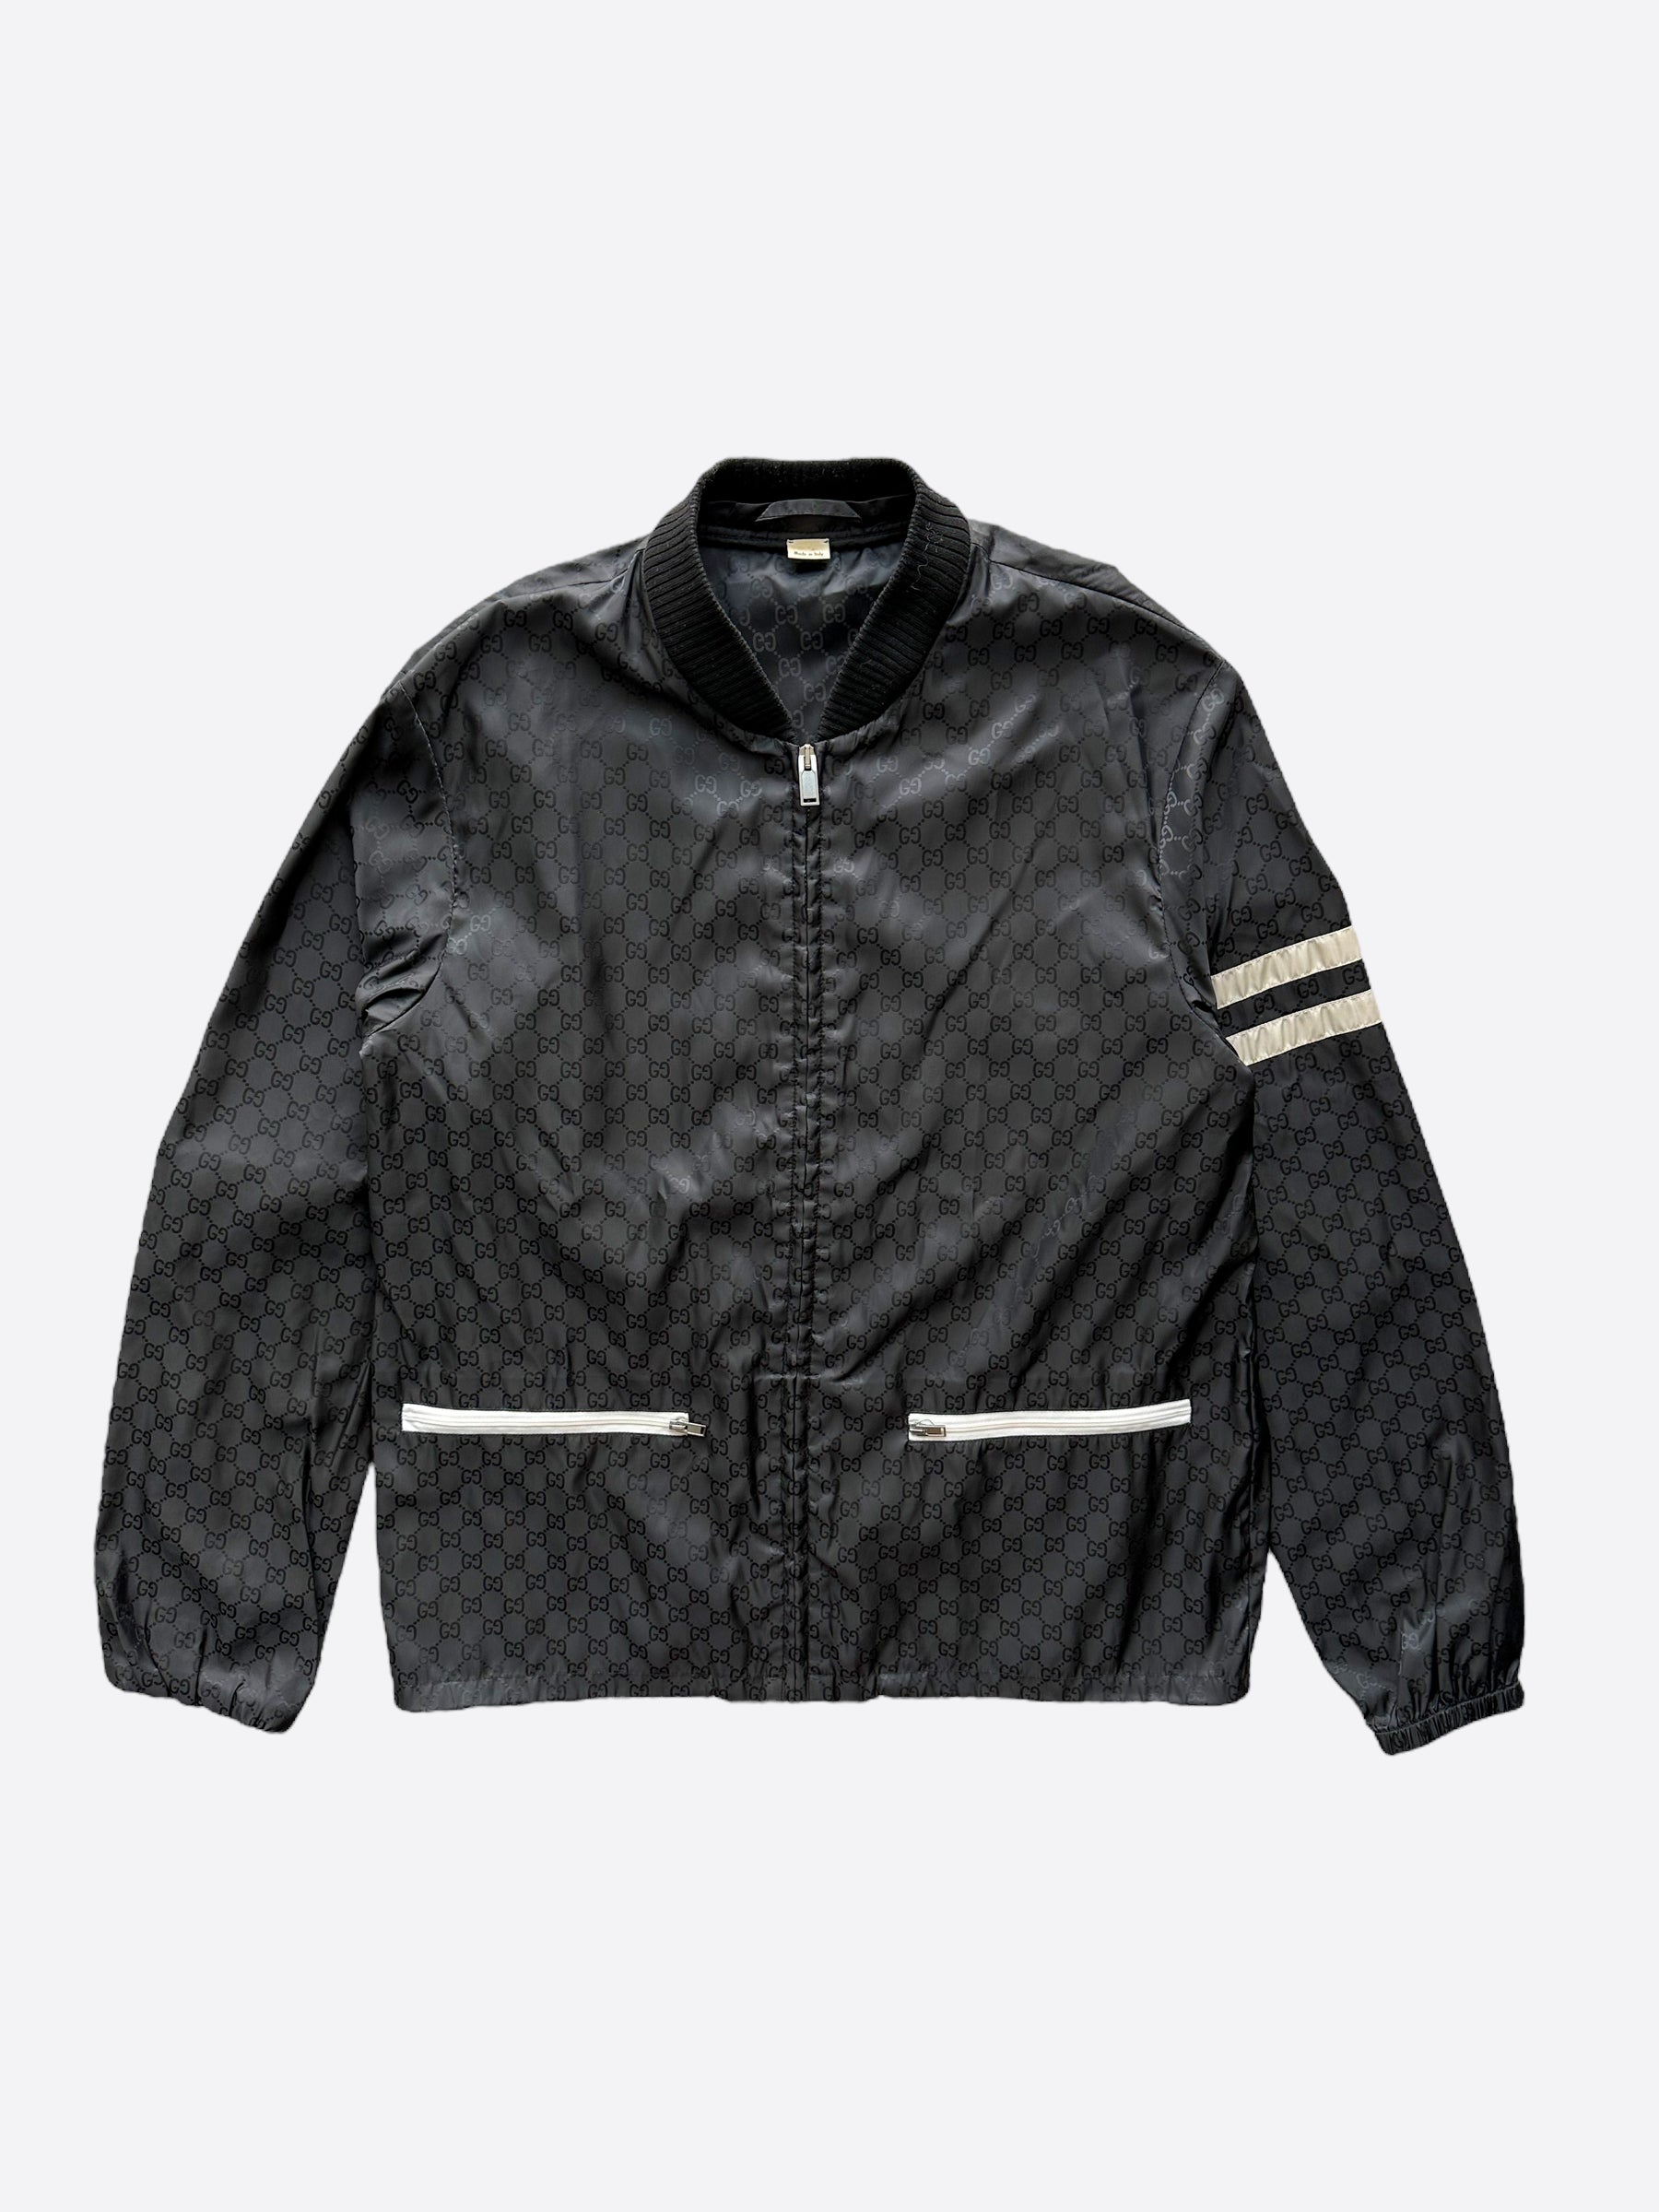 Gucci 2016 GG Logo Bomber Jacket - Black Outerwear, Clothing